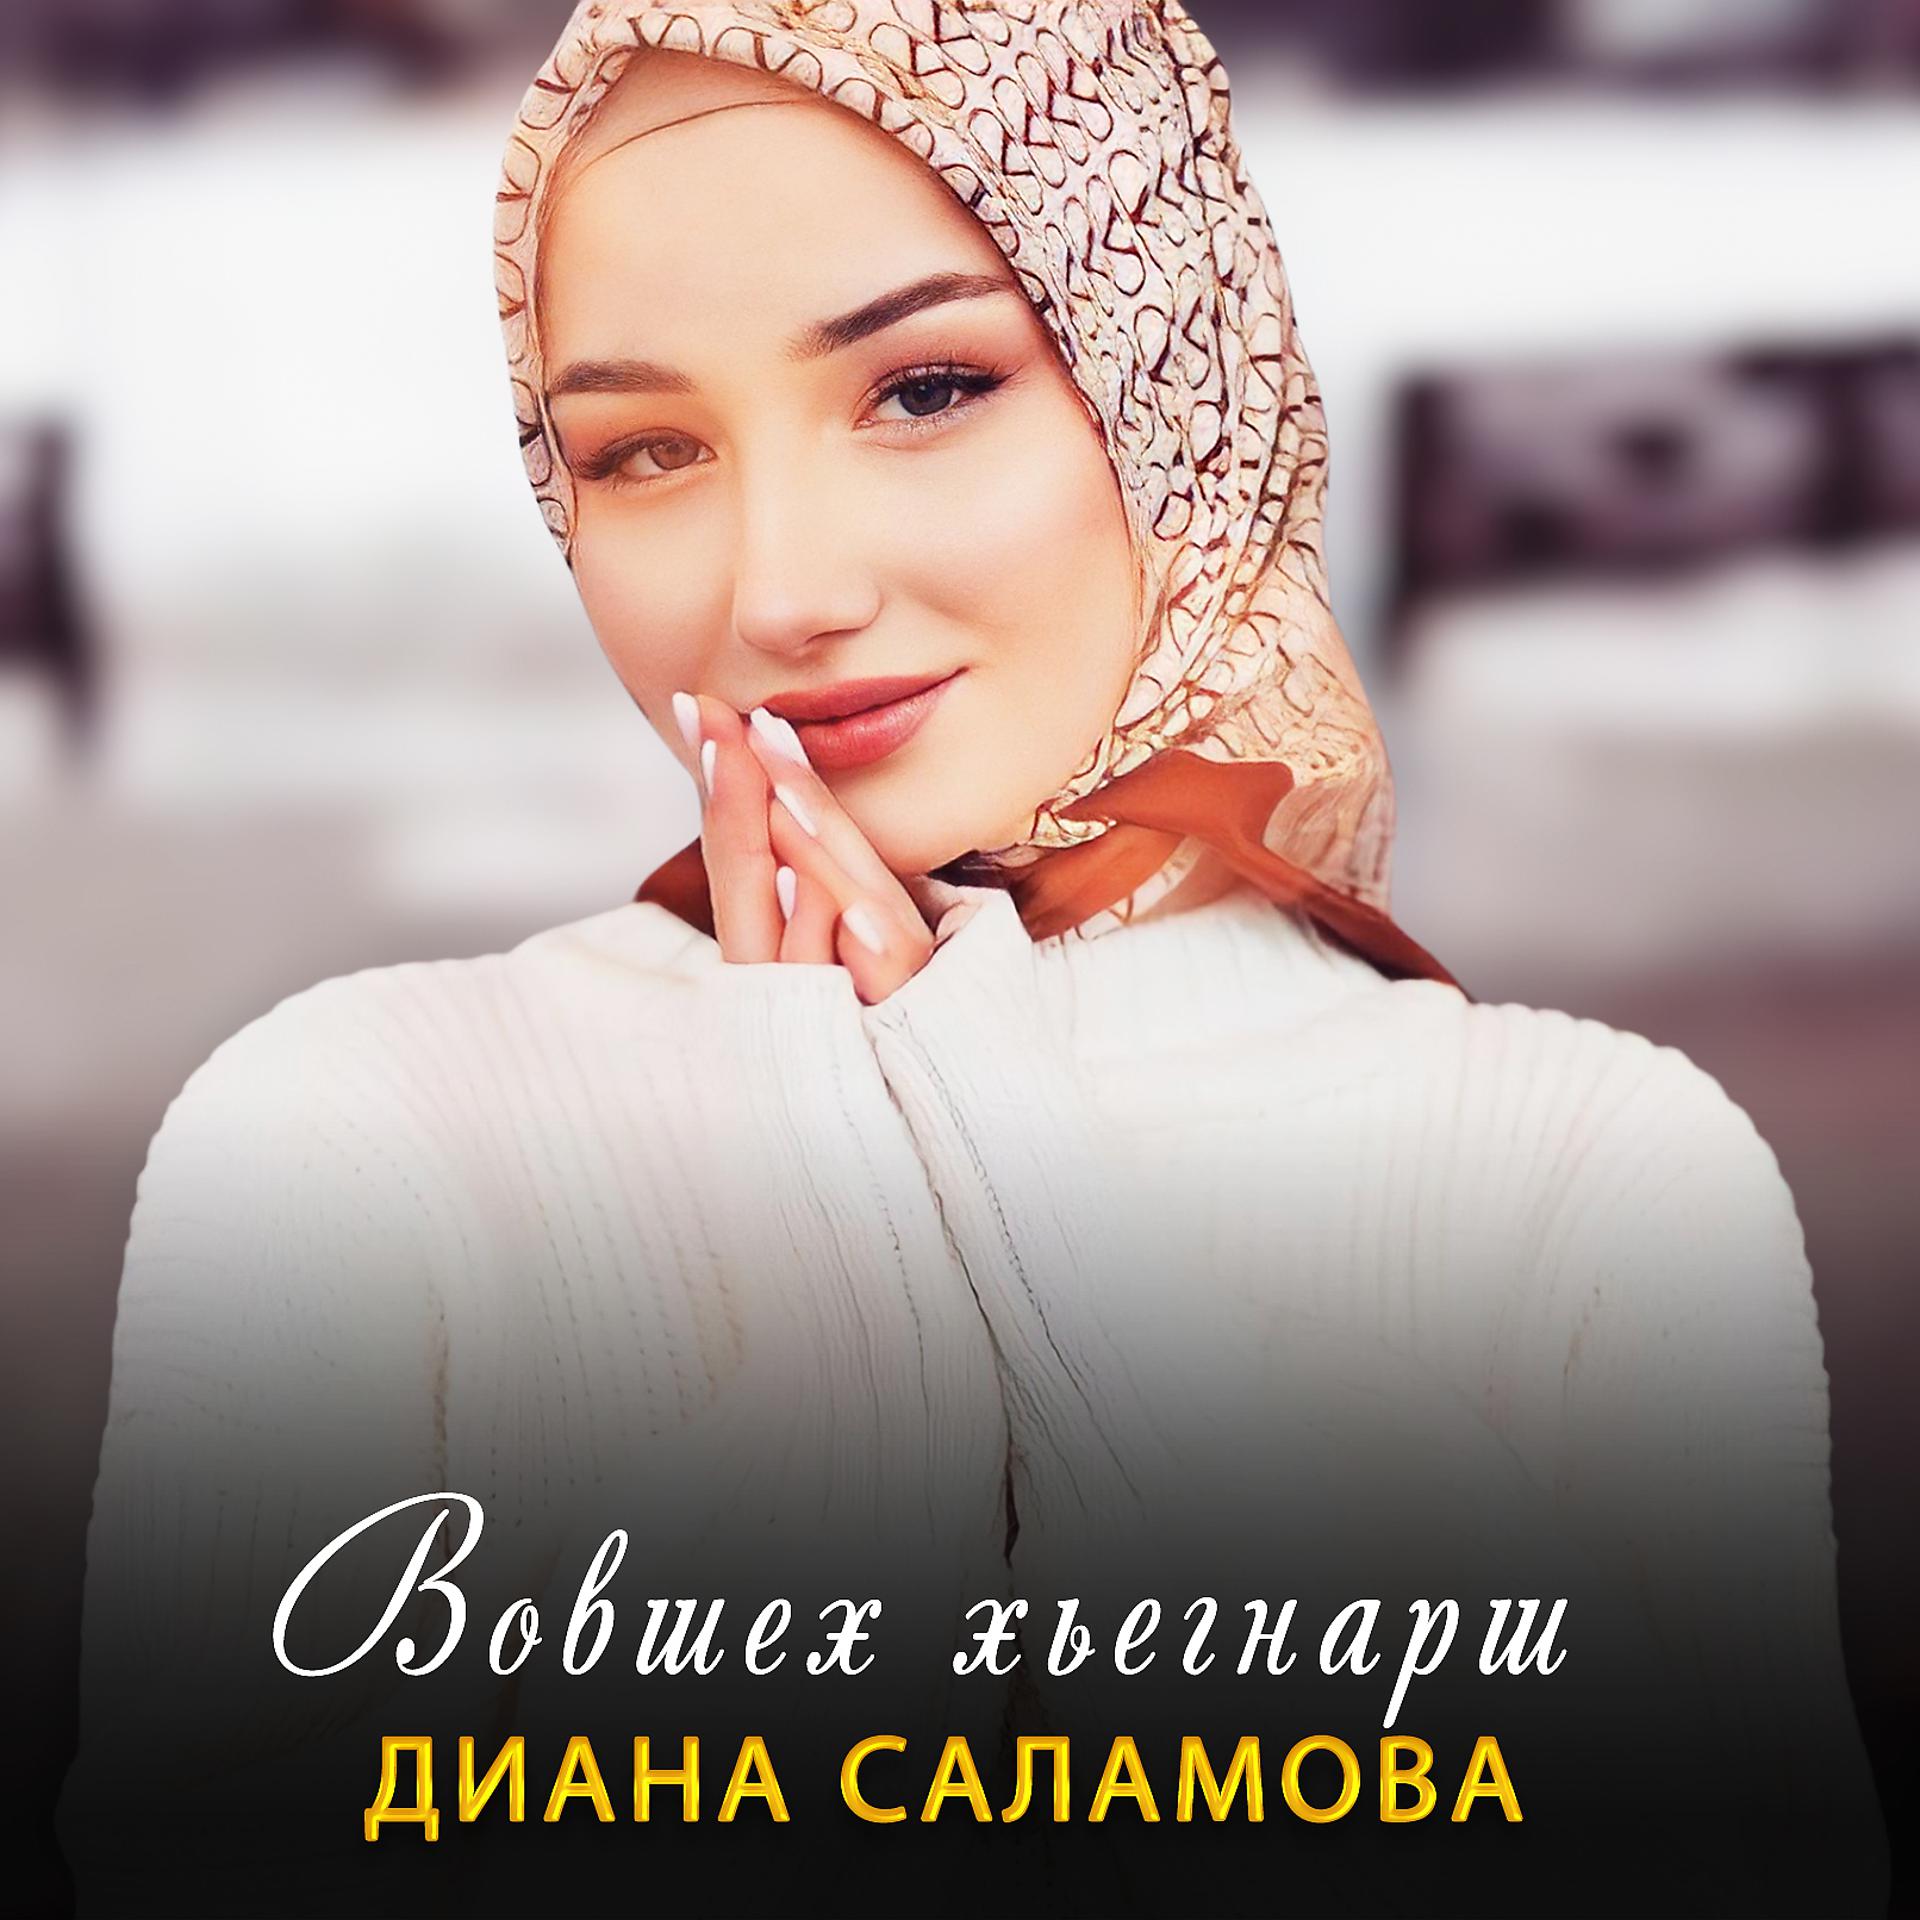 Постер к треку Диана Саламова - Вовшех хьегнарш